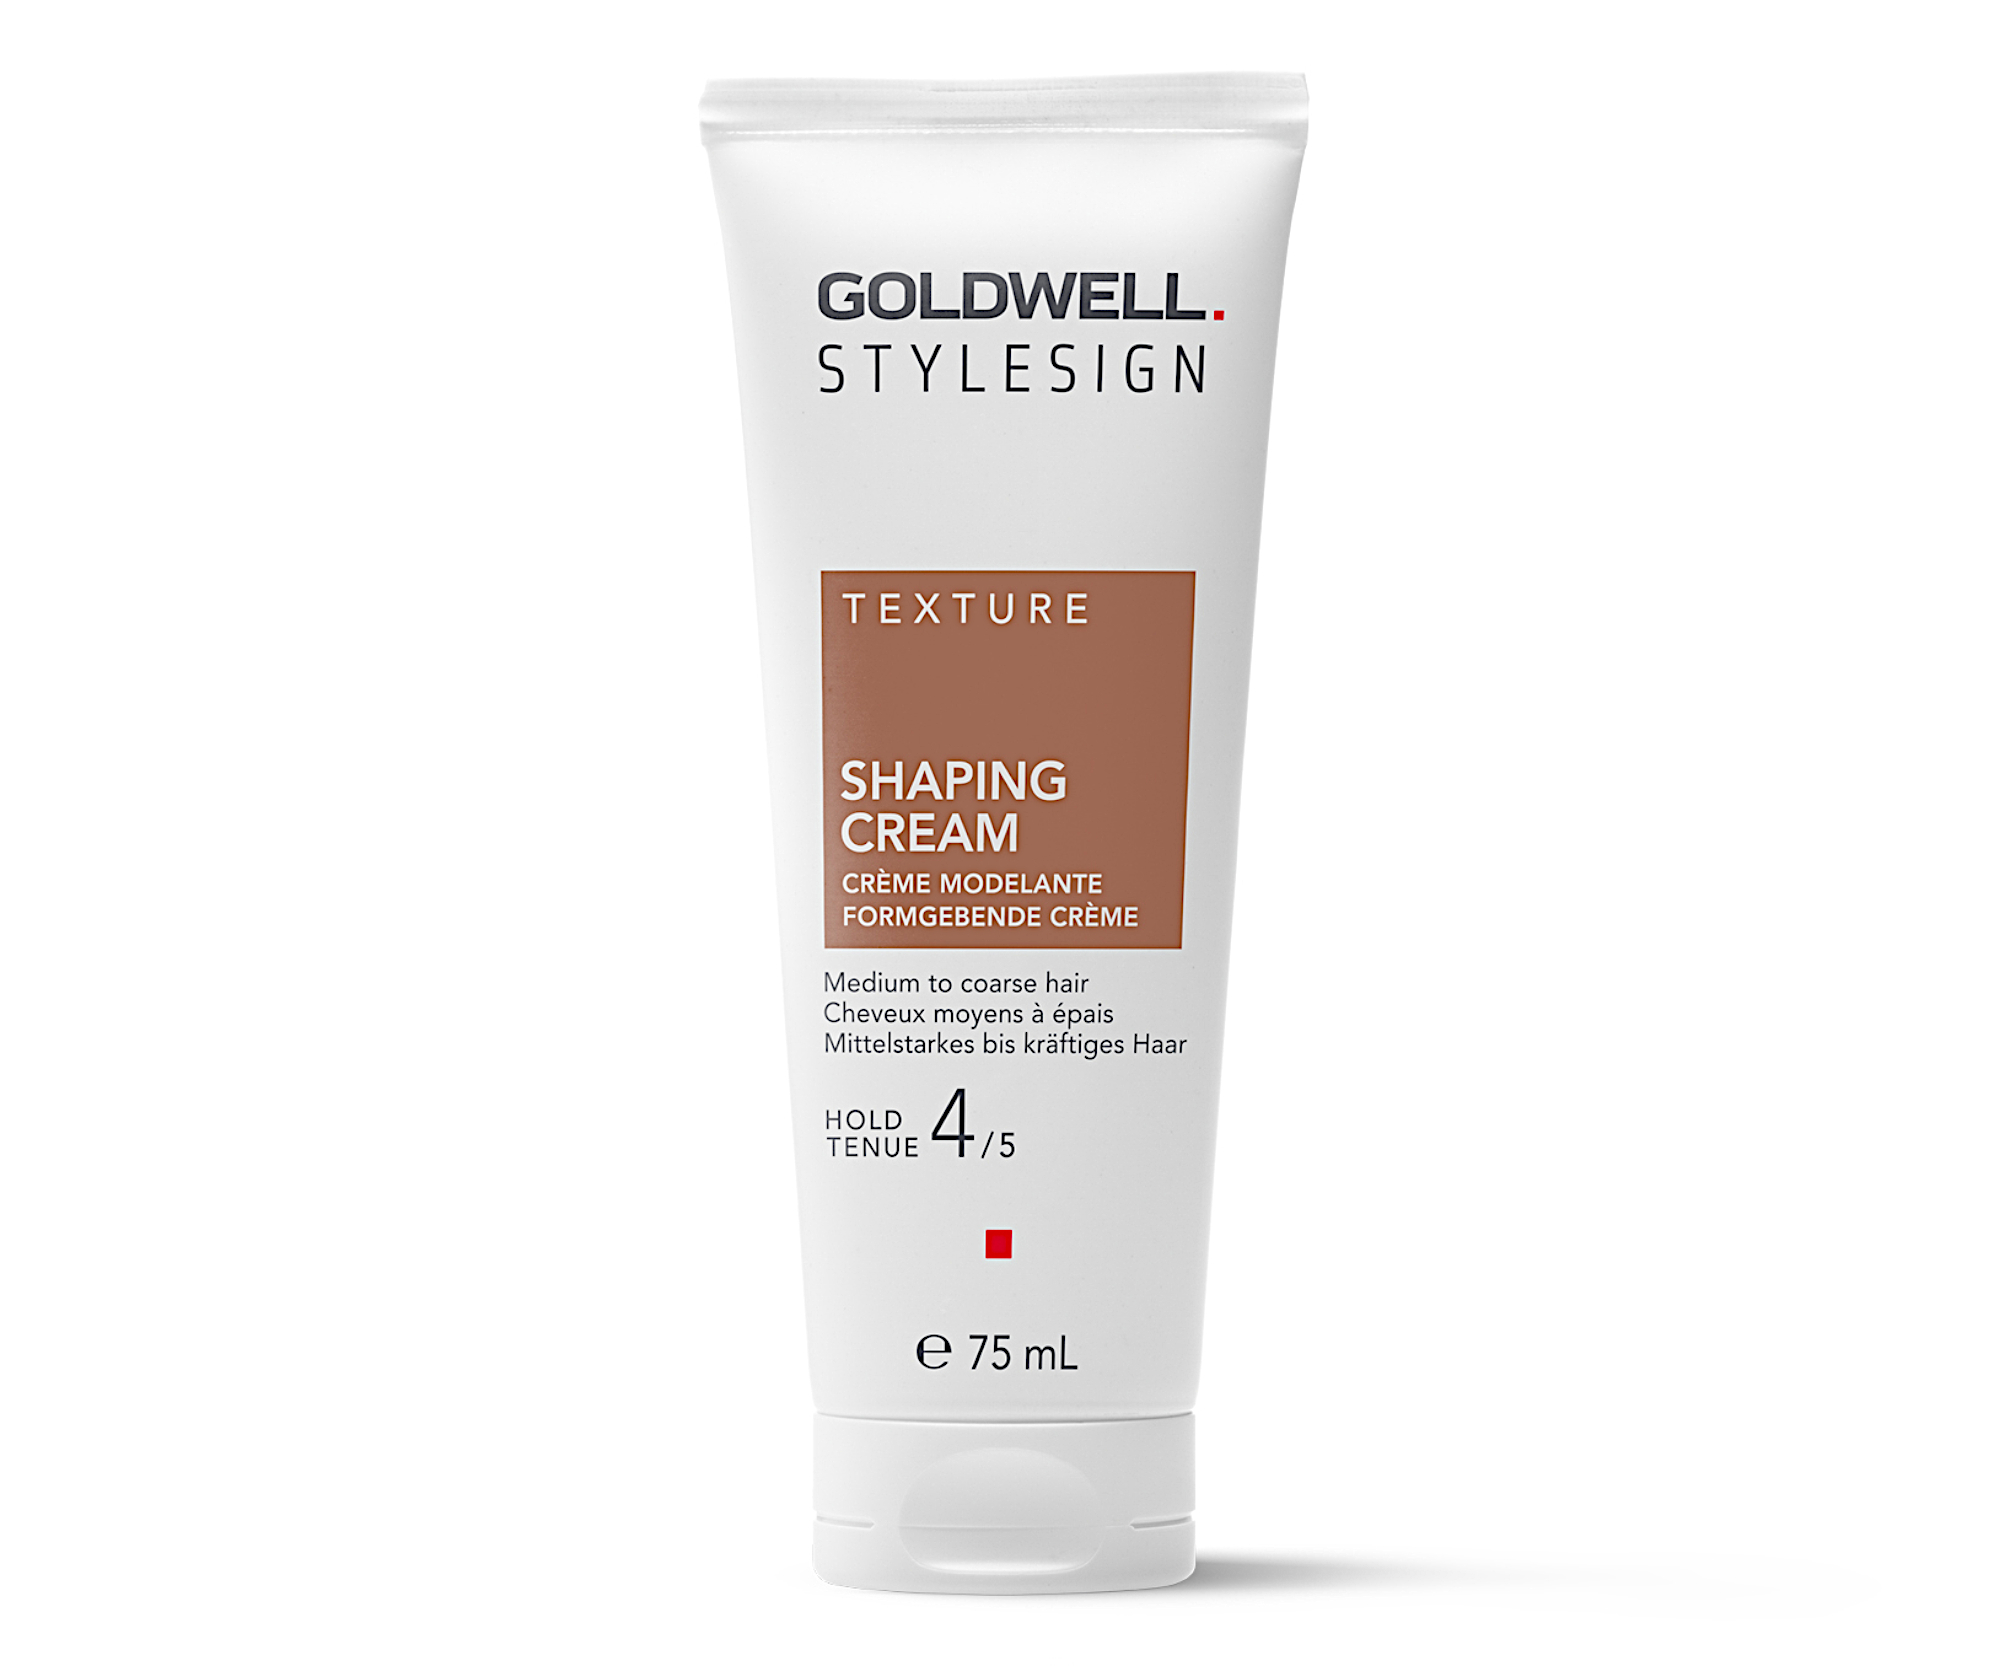 Tvarující krém se silnou fixací Goldwell Stylesign Texture Shaping Cream - 75 ml + dárek zdarma